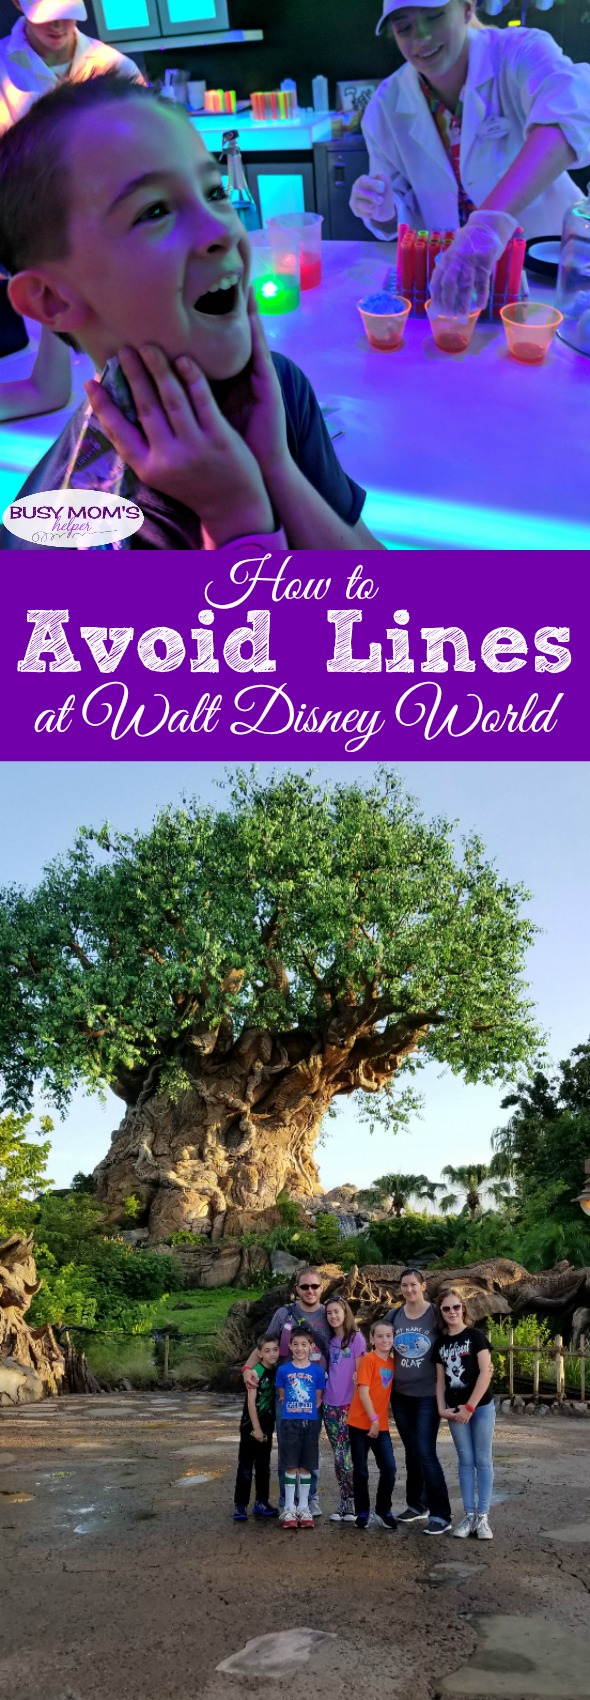 How to Avoid Lines at Walt Disney World #partner #waltdisneyworld #travel #michaelsvips #tourguide #disneyparks #disneytrip #disneytips #familytravel